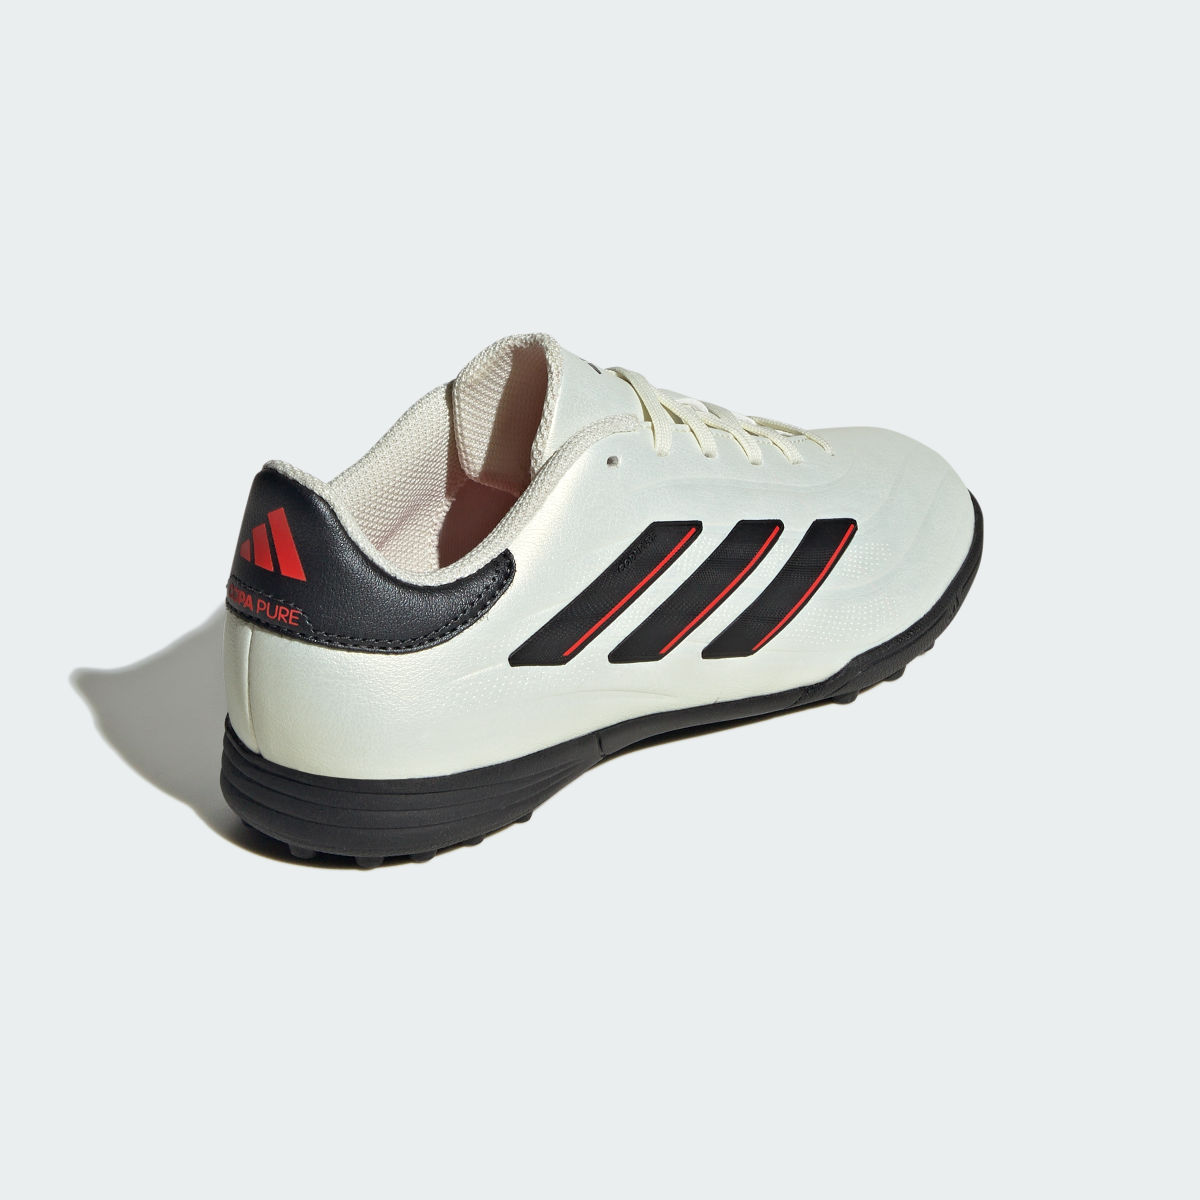 Adidas Copa Pure II League Turf Shoes. 6